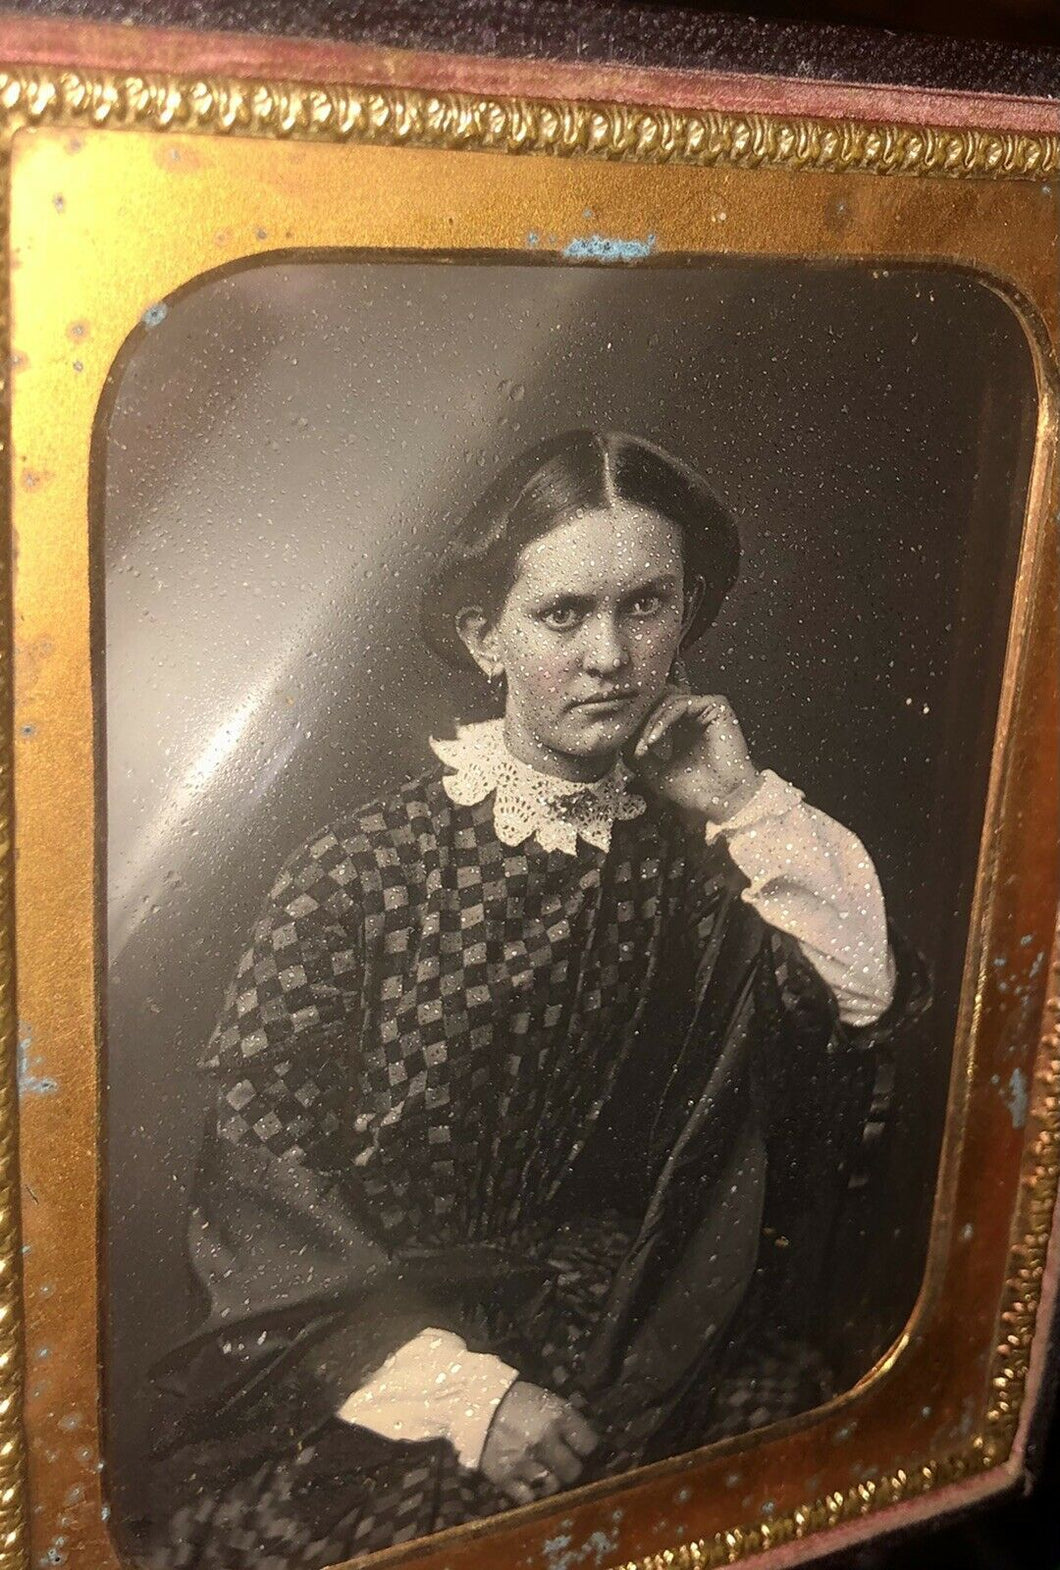 1/4 daguerreotype pretty girl in checkered dress 1850s - sealed - texas estate